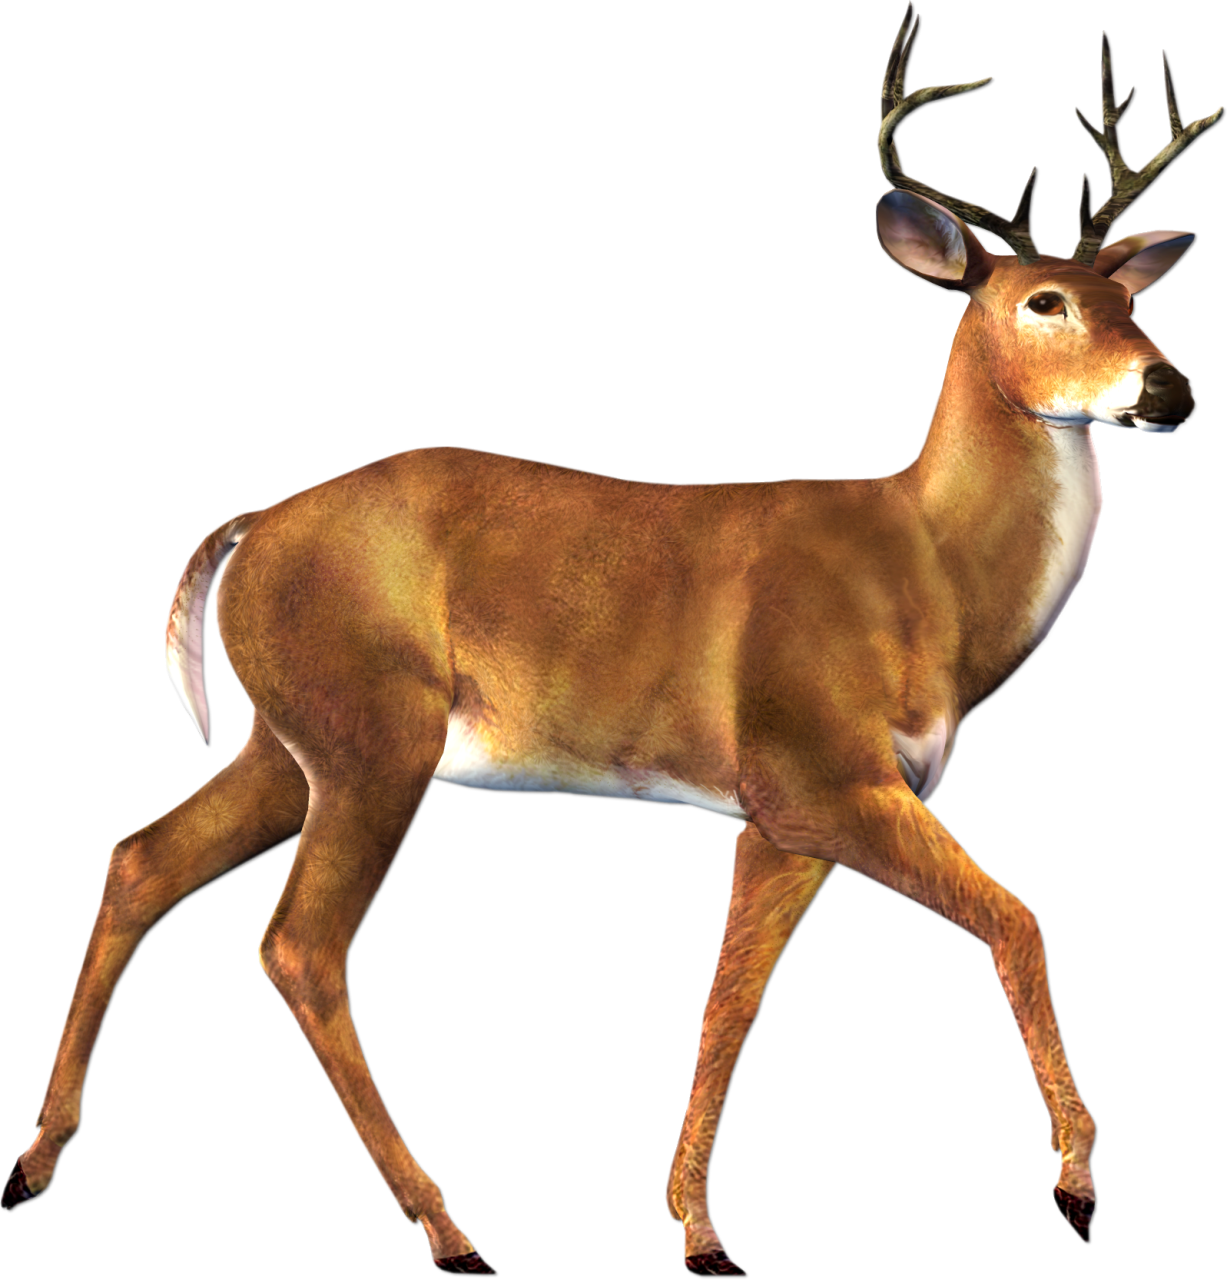 Animal clipart deer